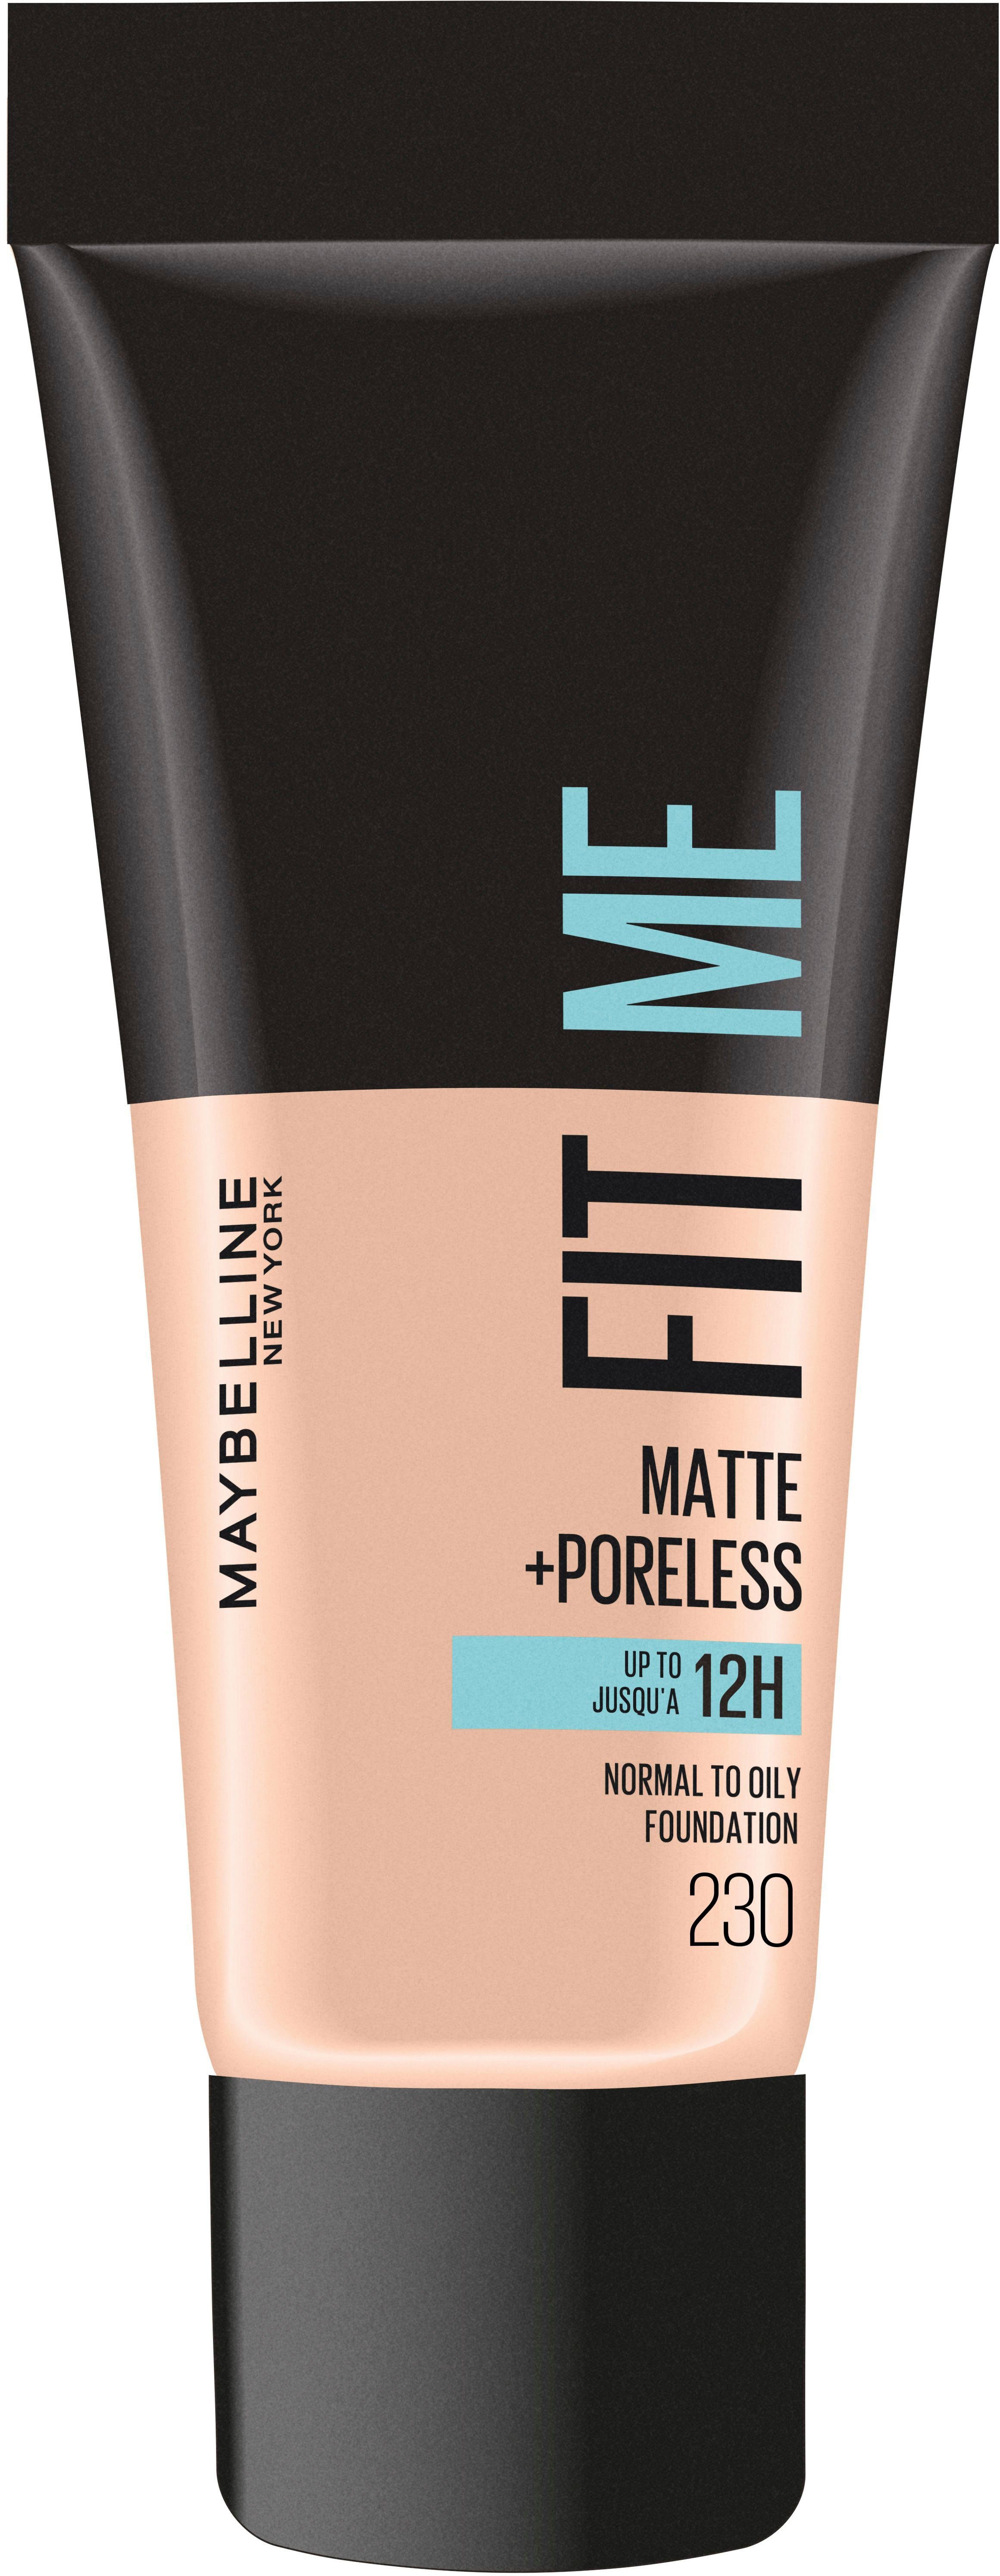 Make-Up Me! Matte Fit Foundation YORK Poreless NEW MAYBELLINE New York + Maybelline